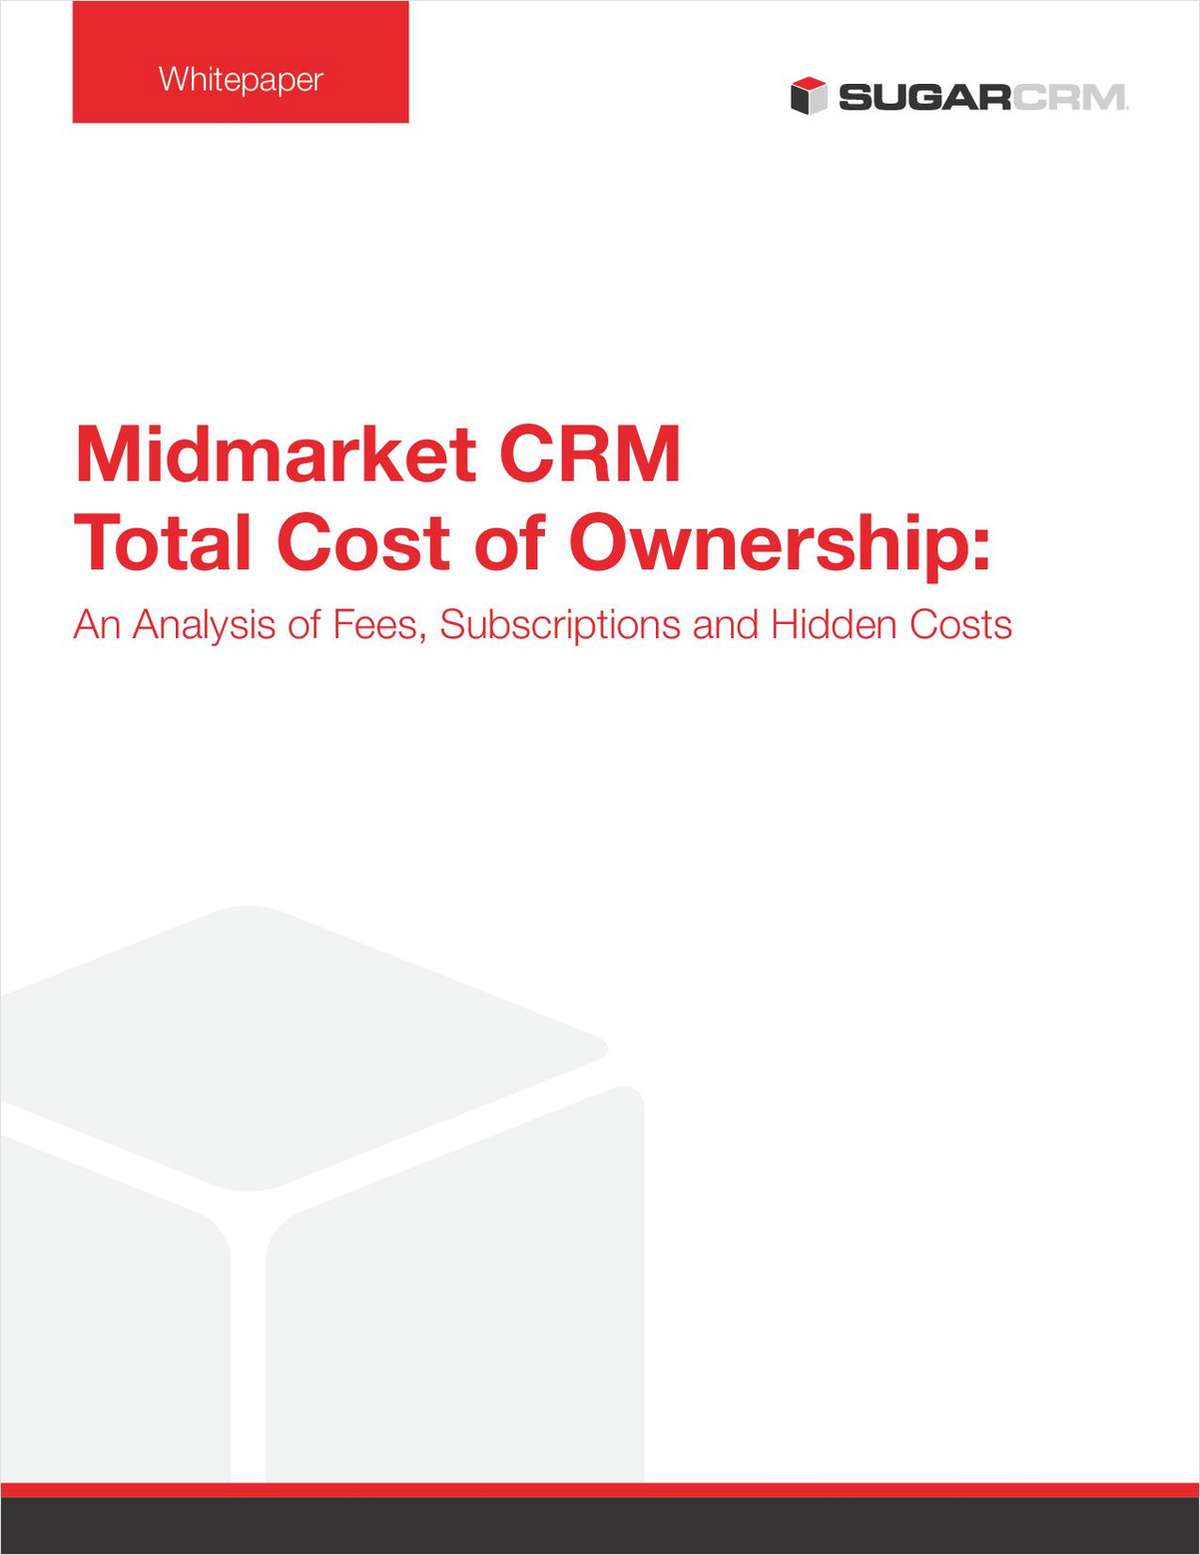 Midmarket CRM Vendor Cost Comparisons